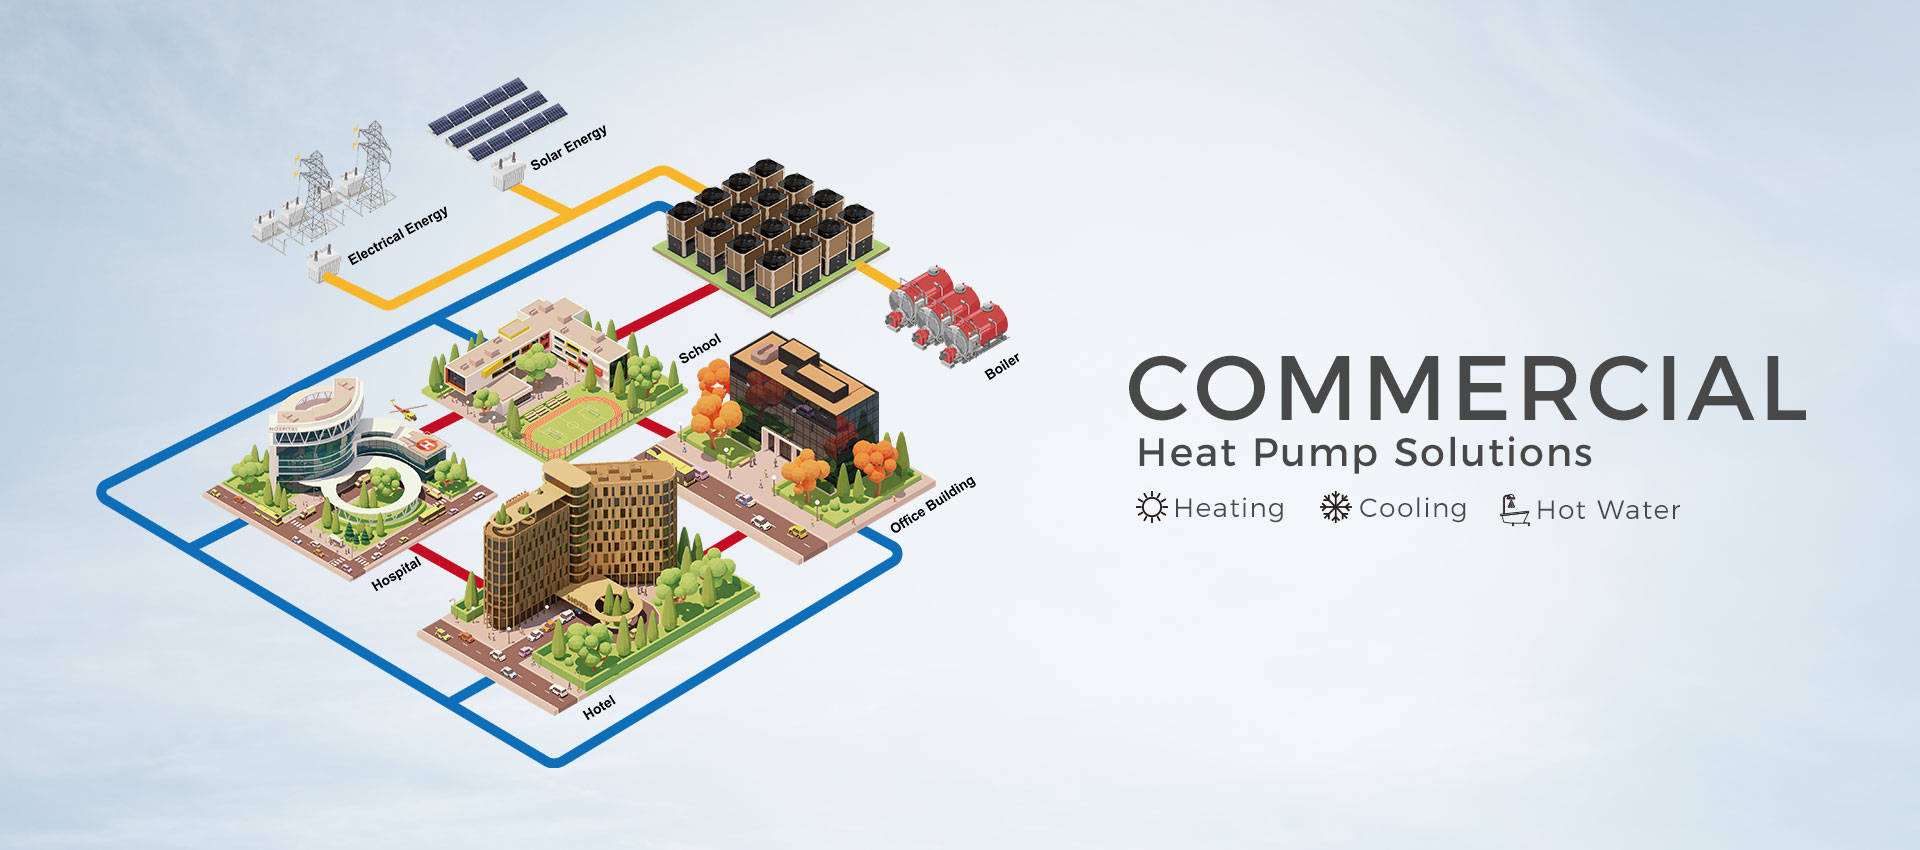 Commercial heat pump